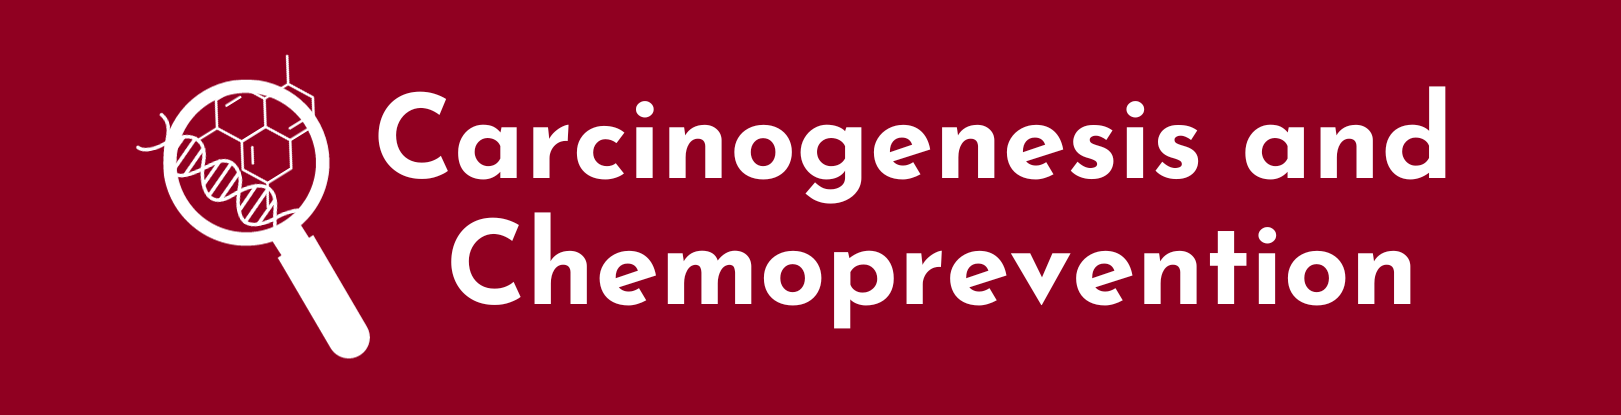 Carcinogenesis and Chemoprevention